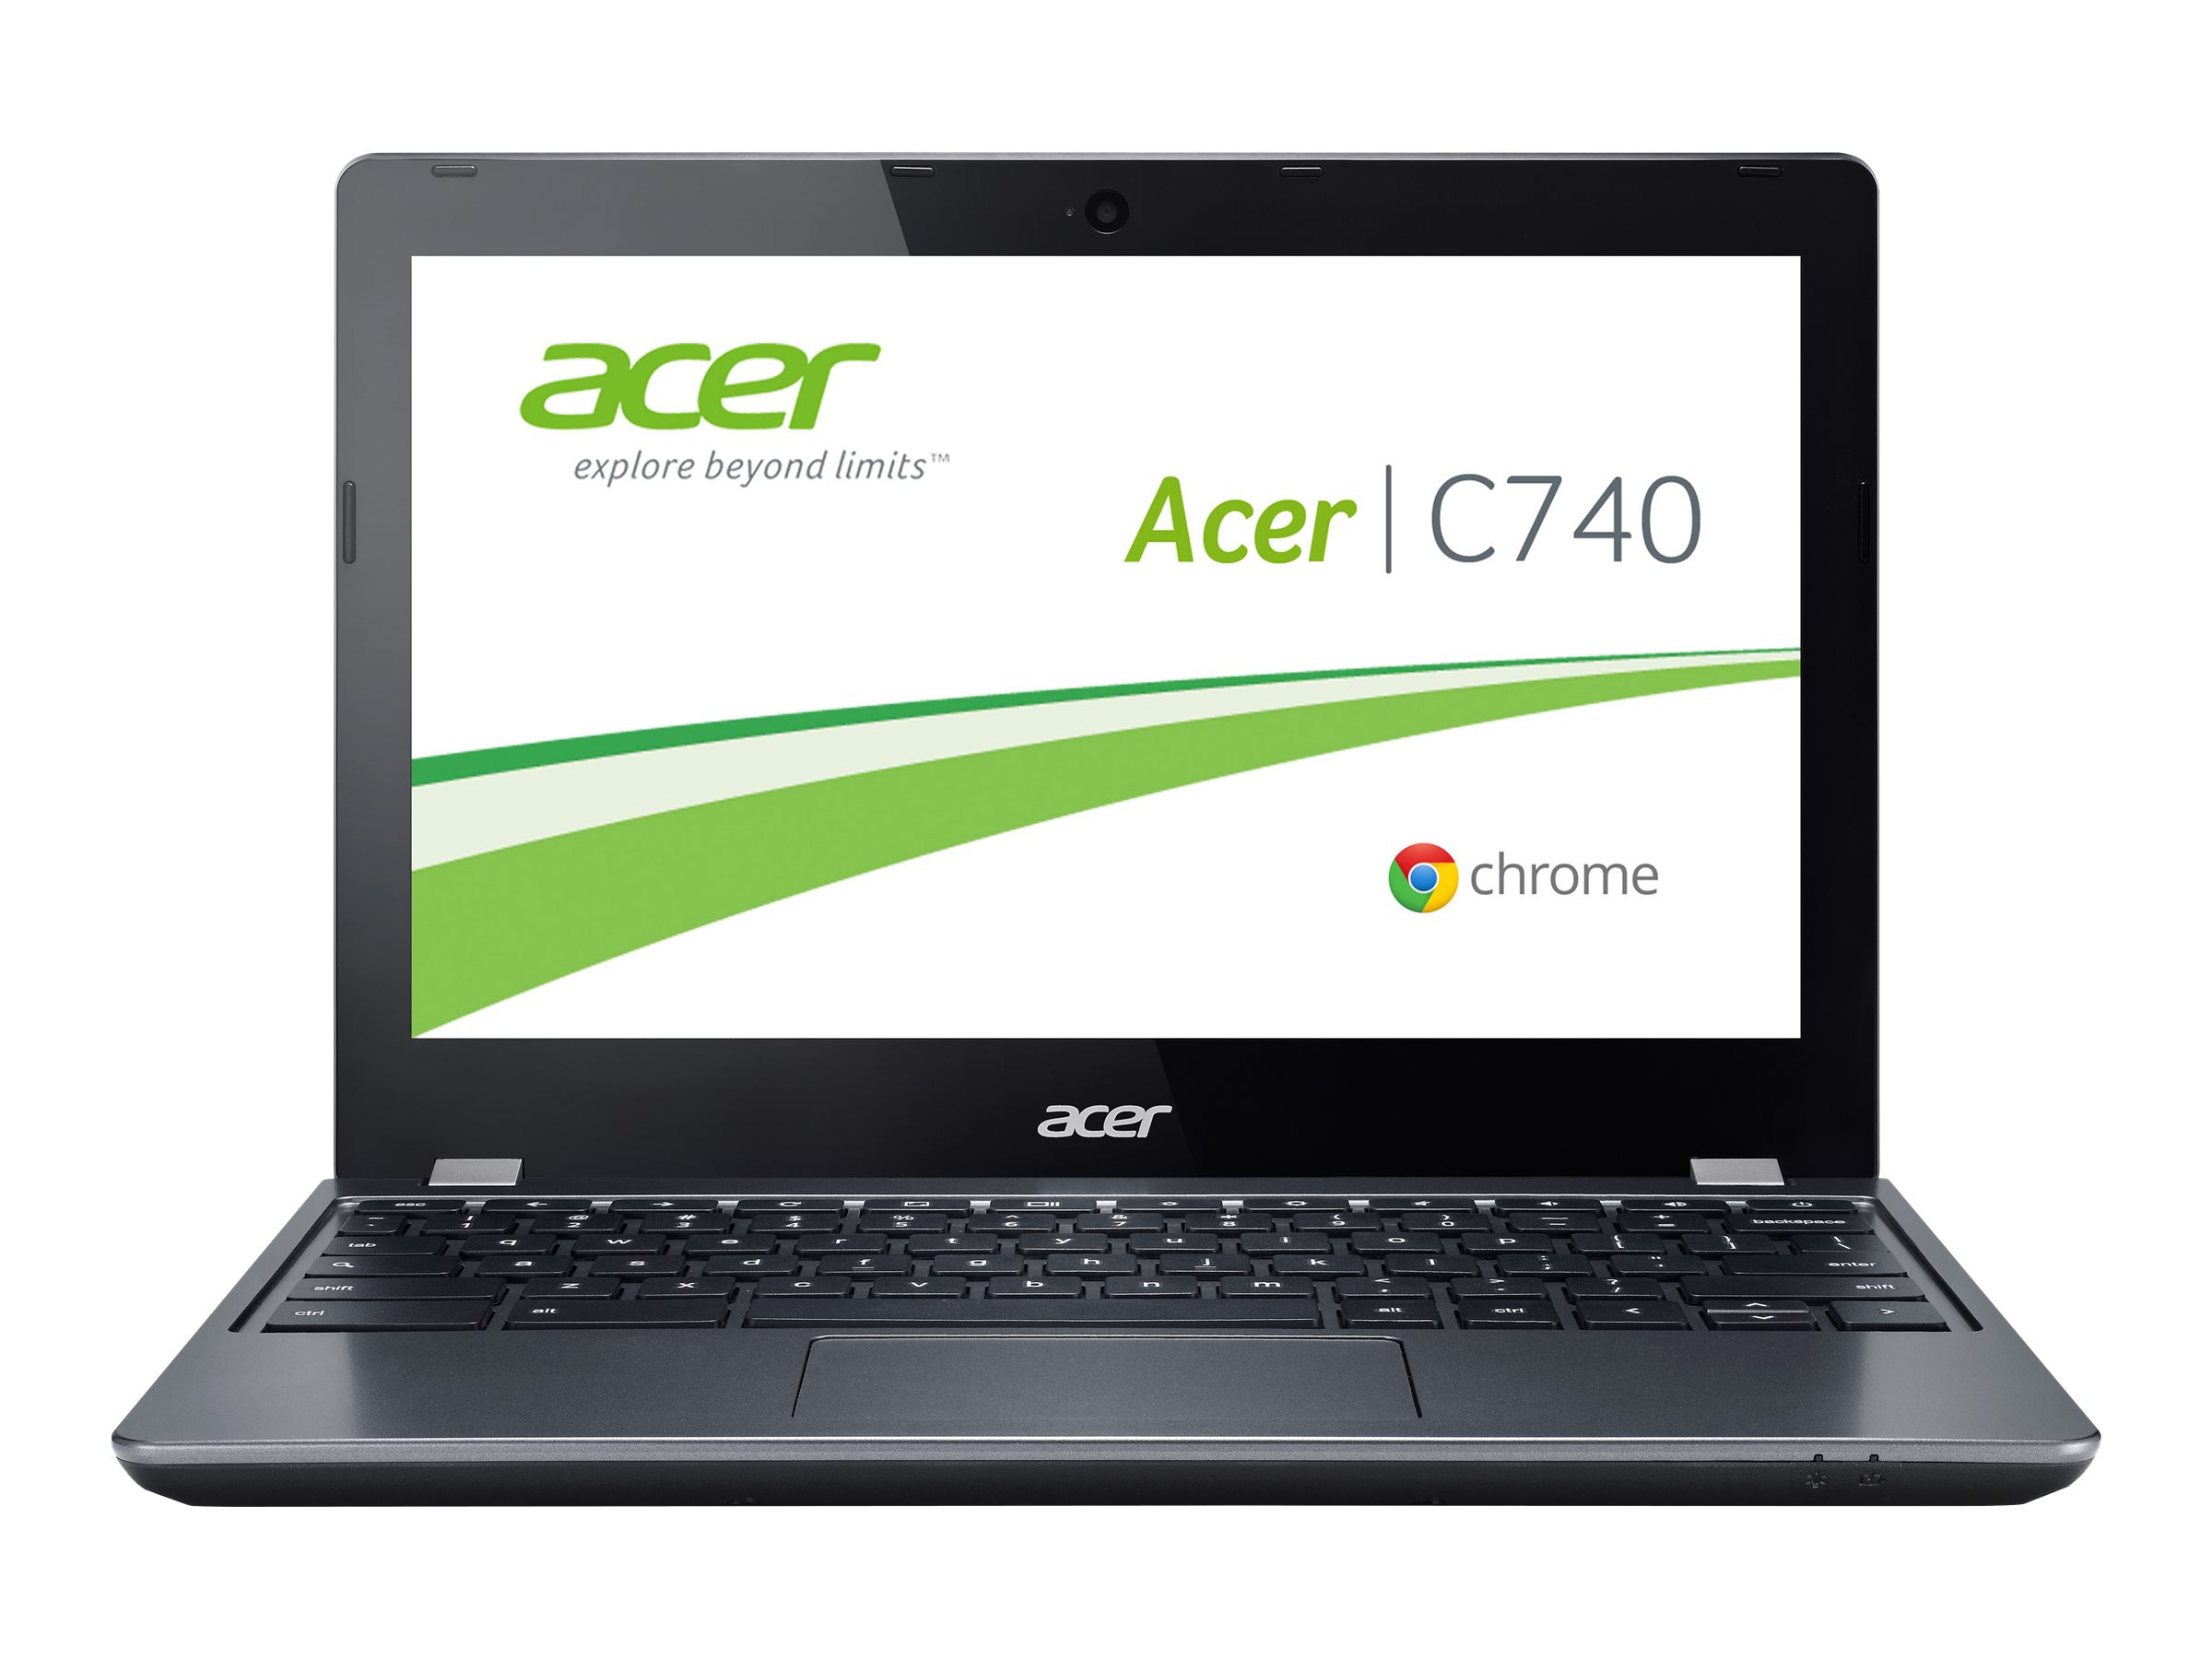 Acer Chromebook 11 (C740)